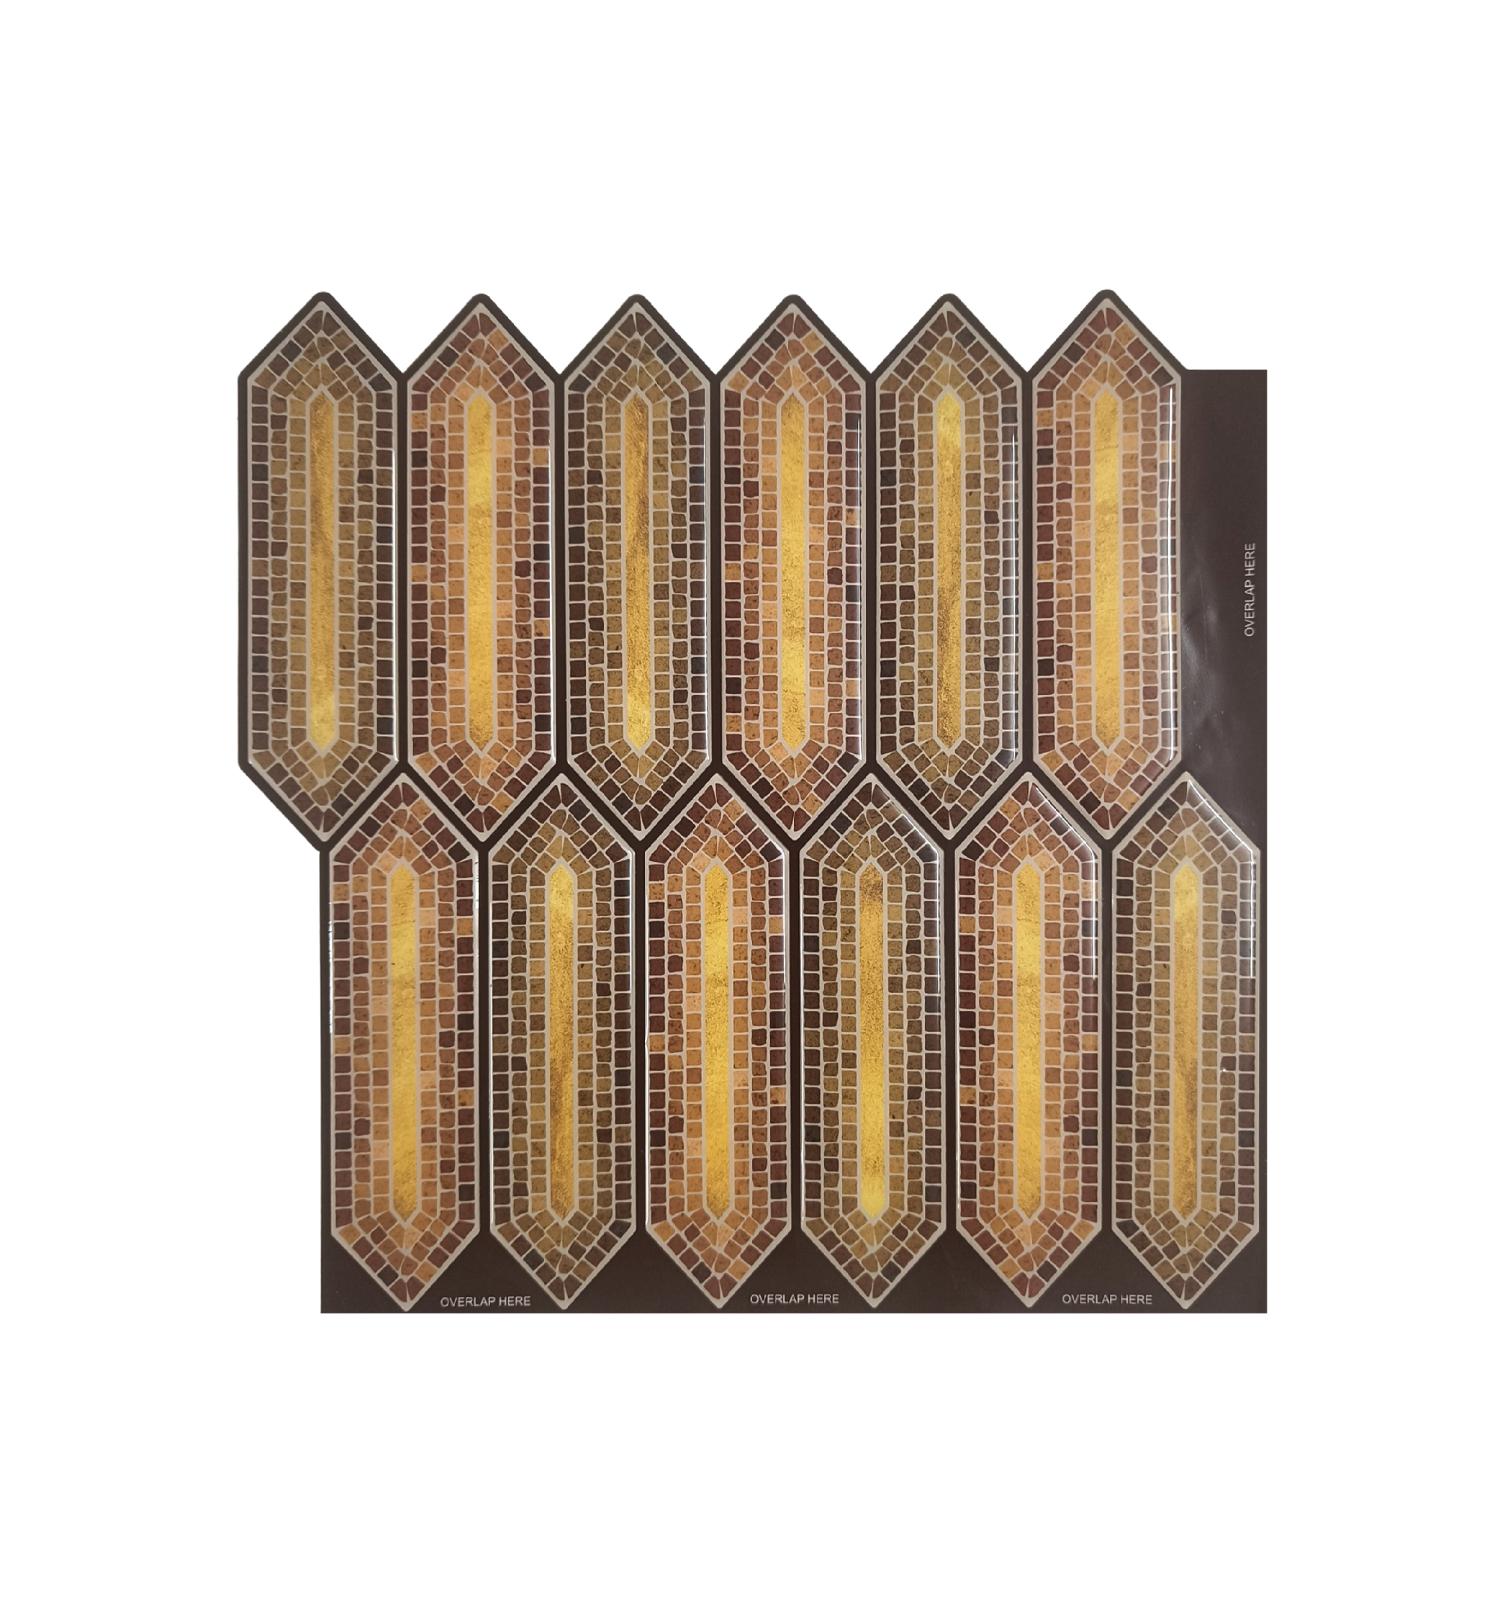 Yellow Hexagon Peel And Stick Wall Tile | Kitchen Backsplash Tiles